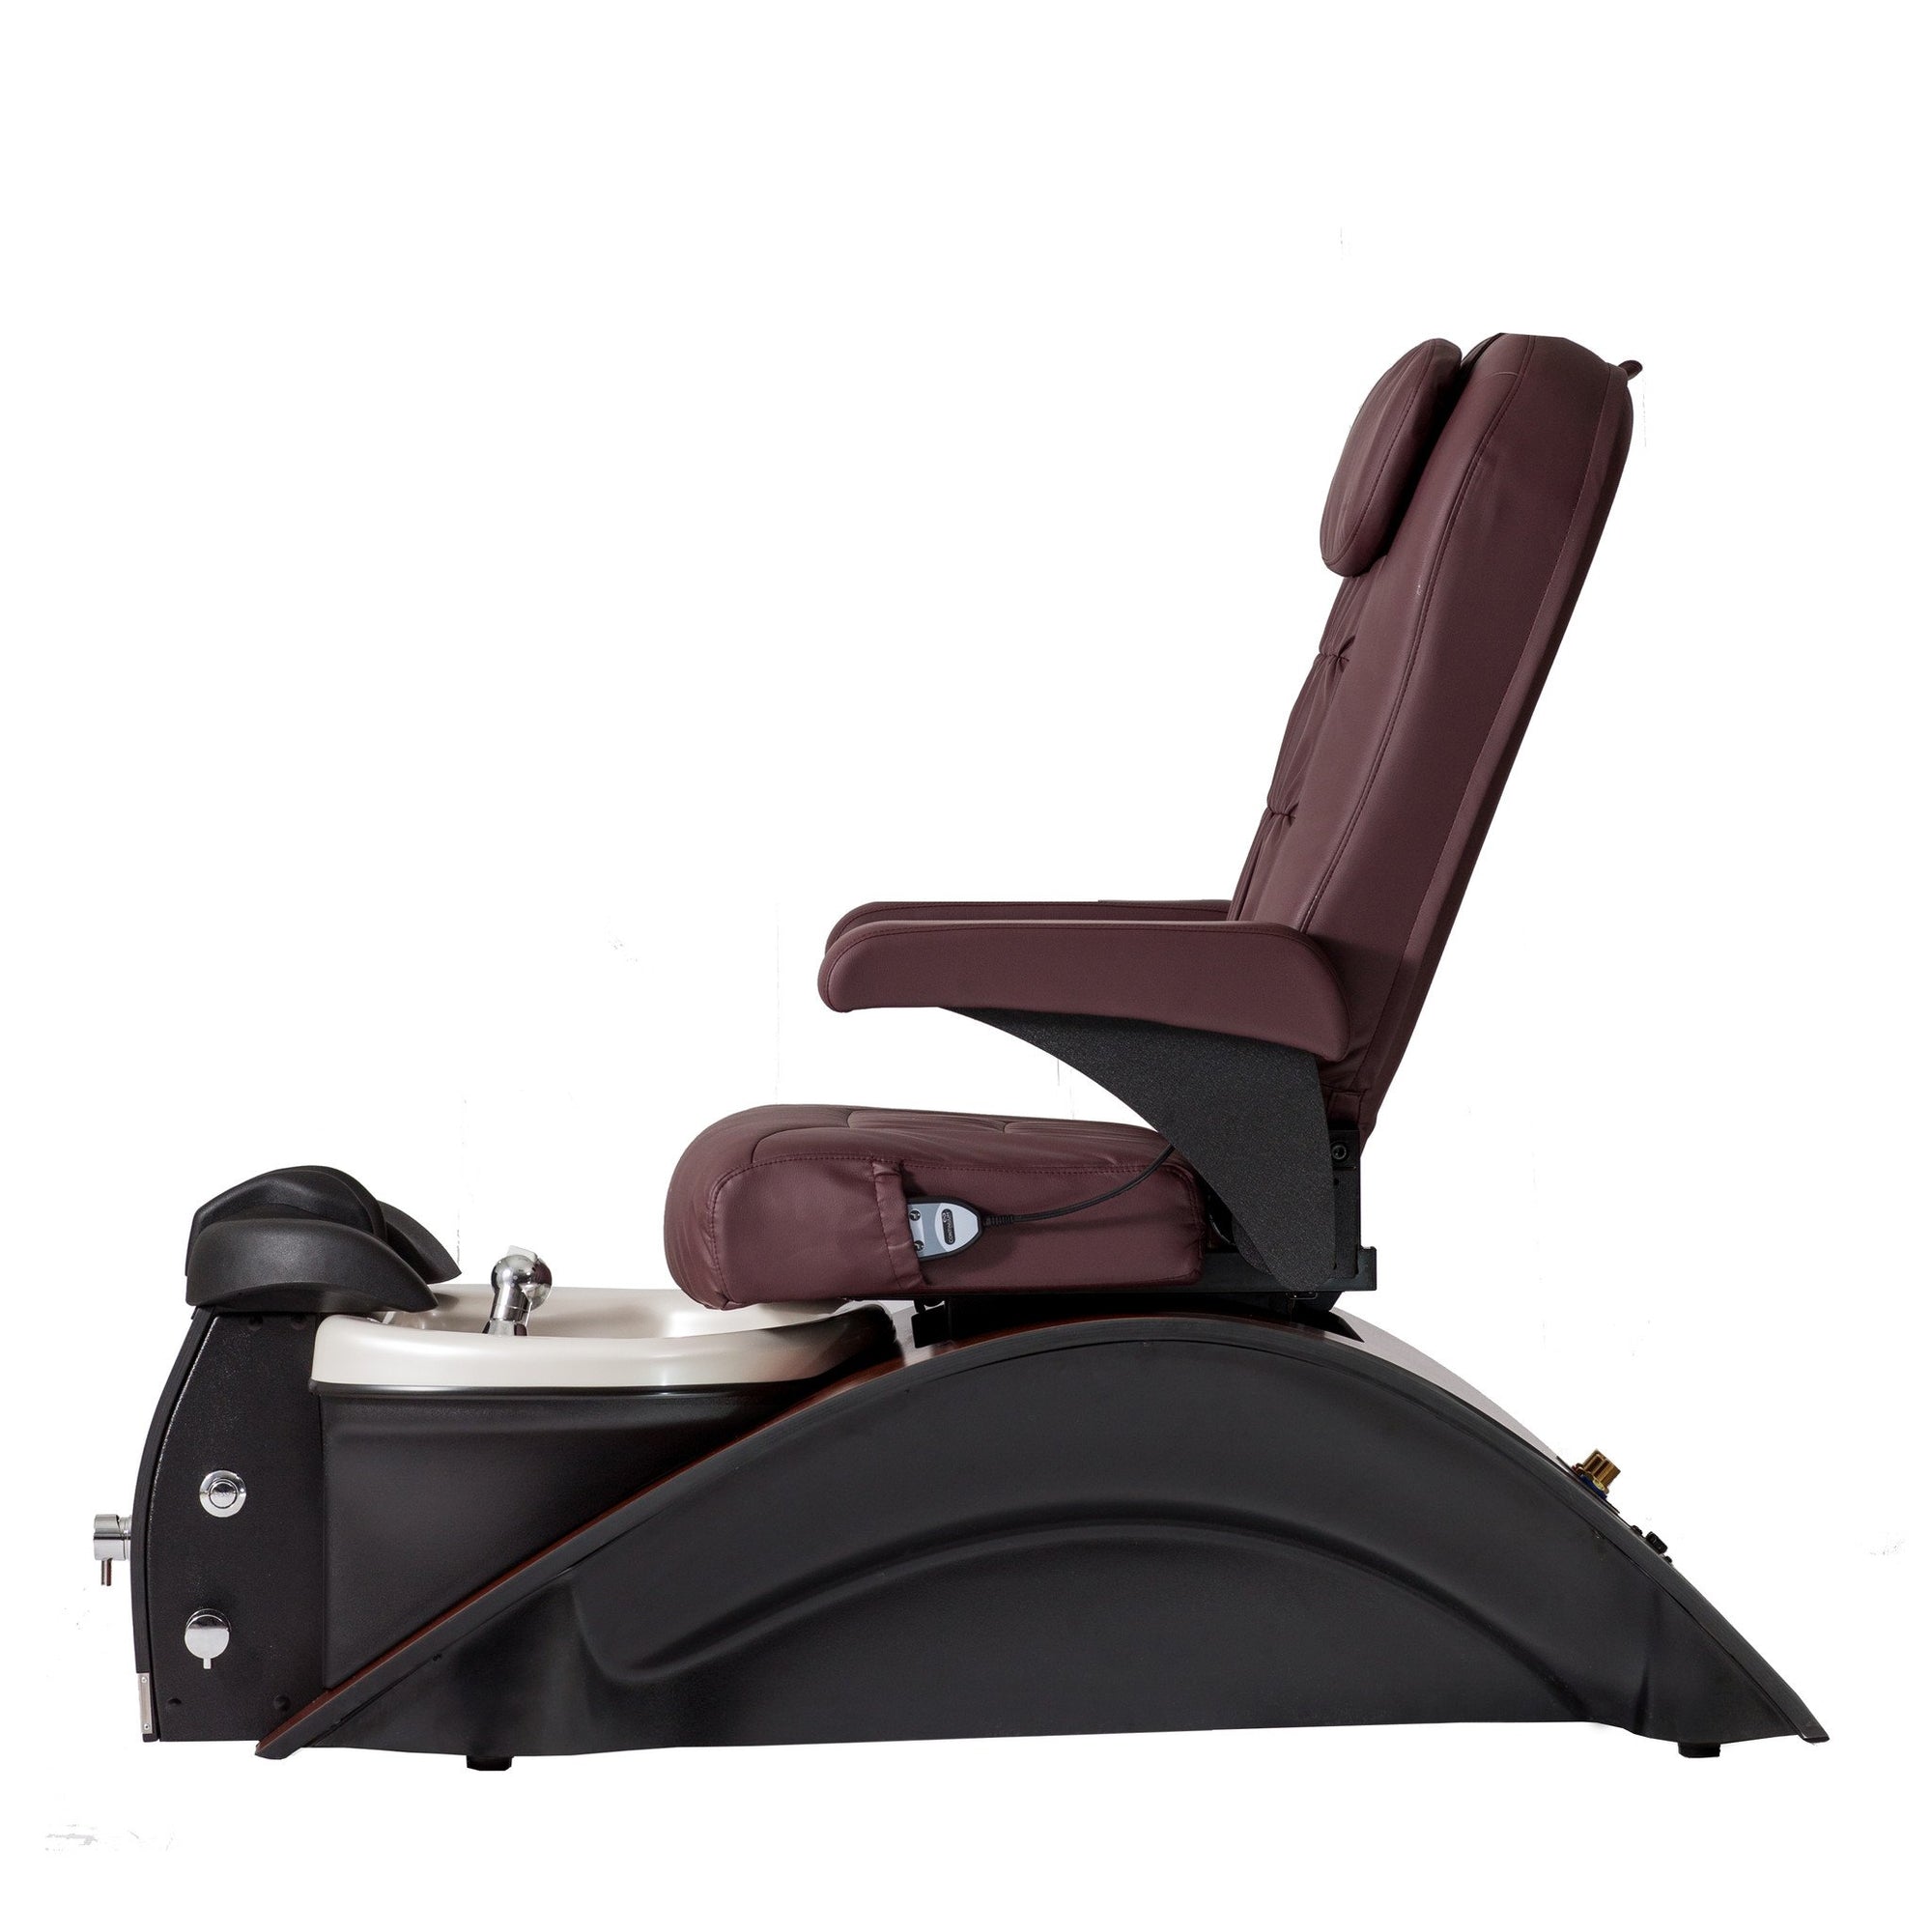 Continuum Continuum Echo SE Pedicure Spa Chair Pedicure & Spa Chairs - ChairsThatGive